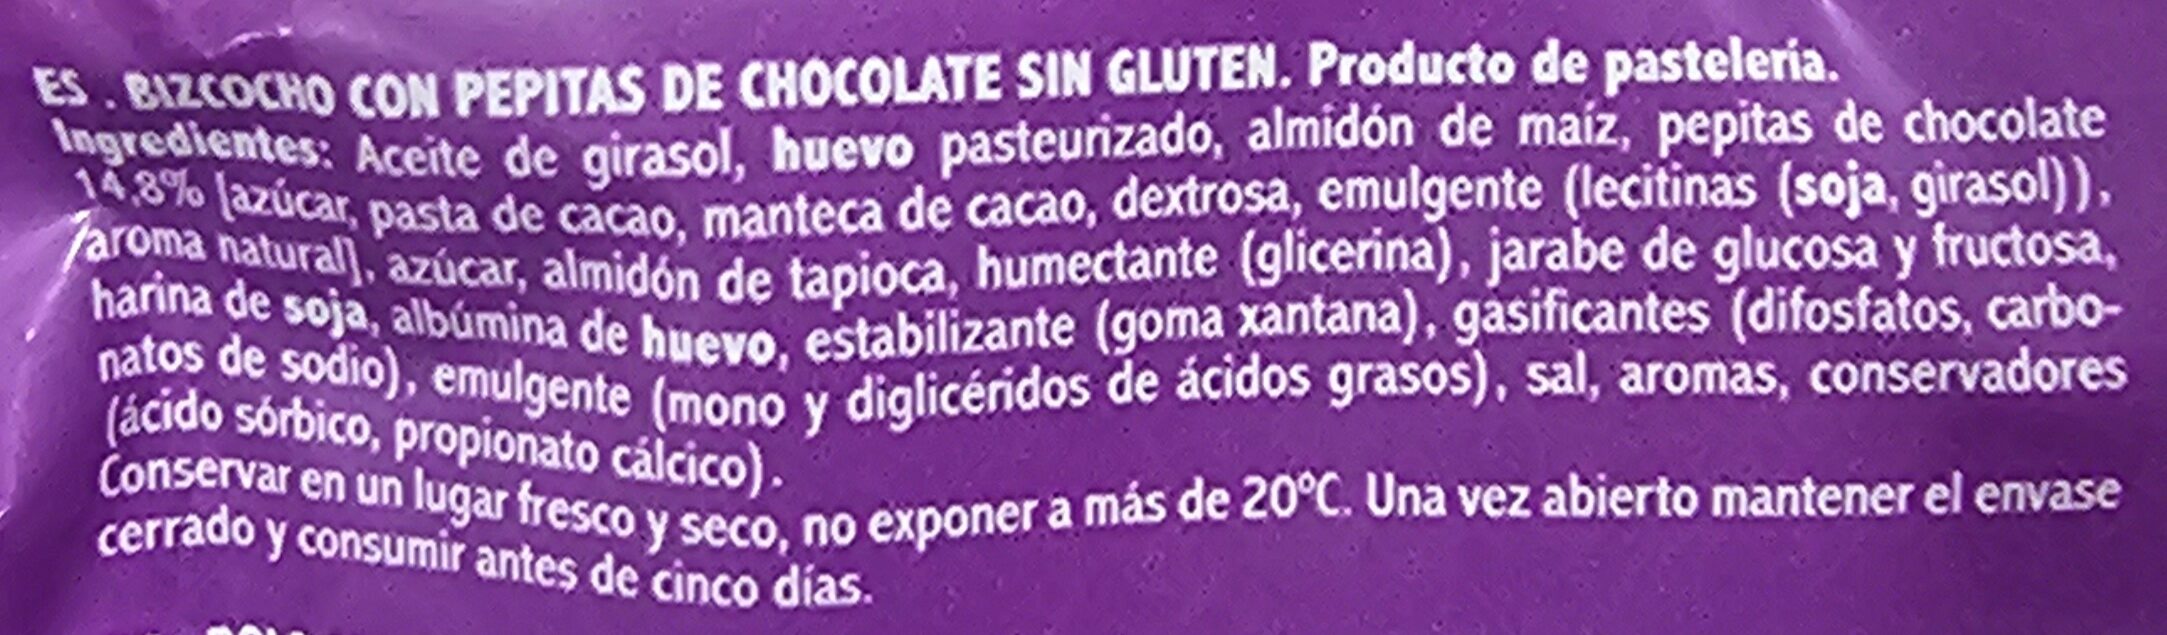 Plum cake con choco chips - Ingredients - es